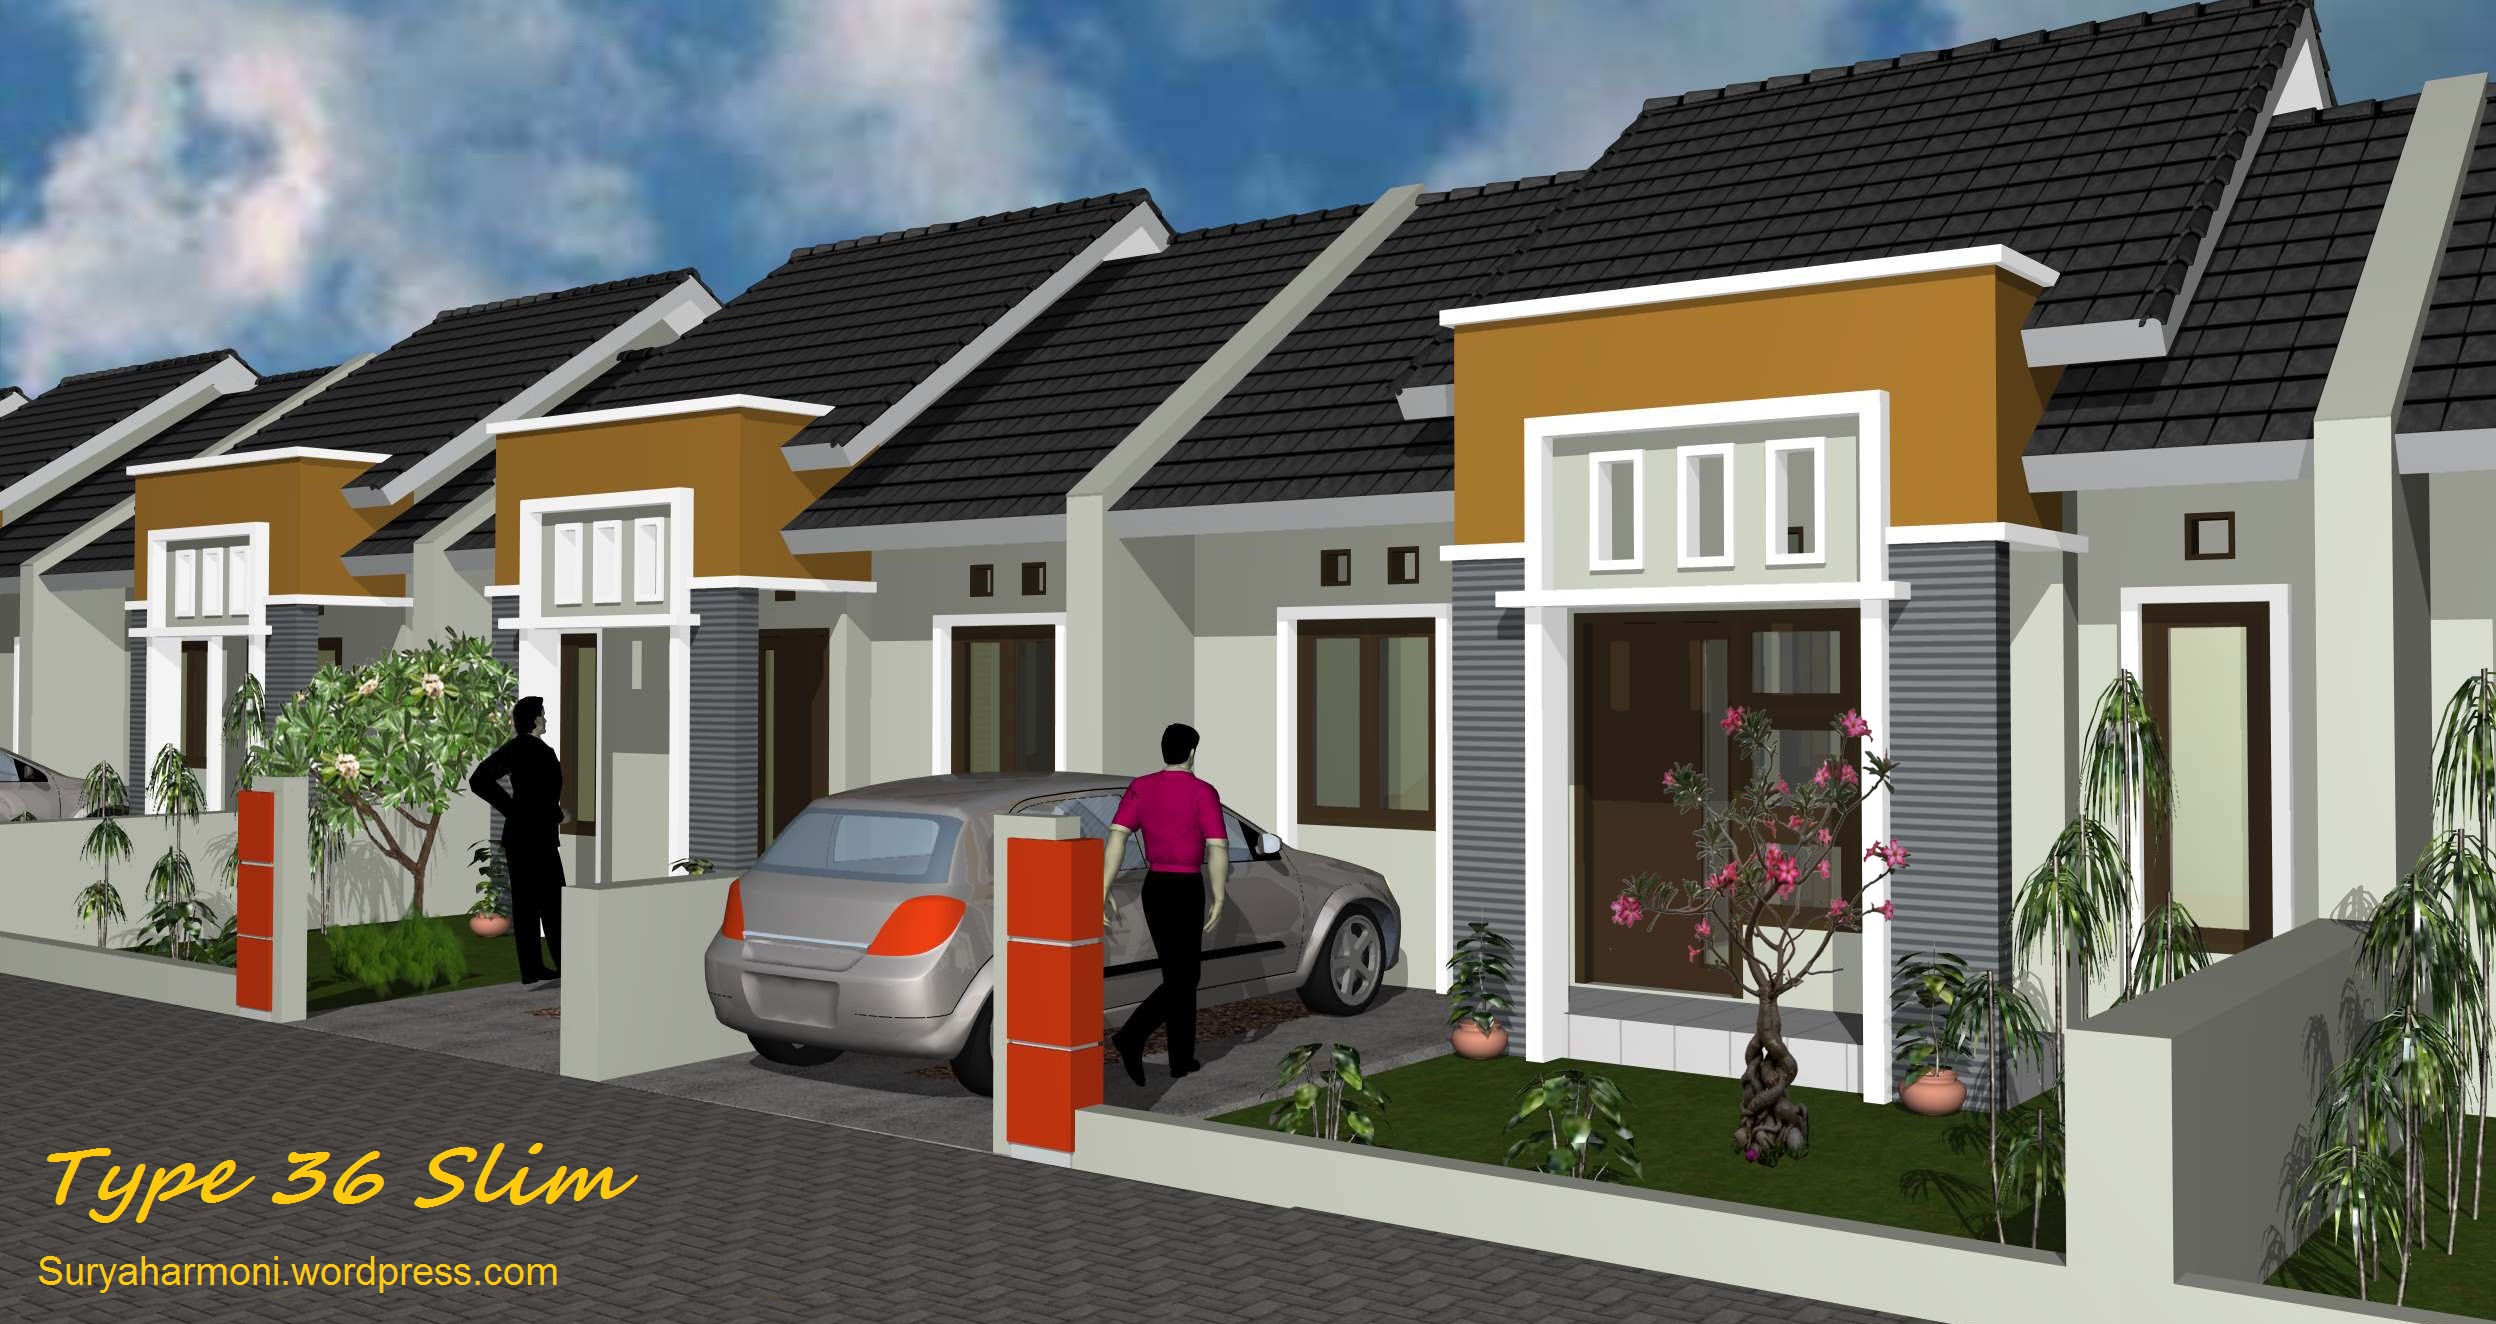 Rumah Minimalis Type 36 Surabaya Dshdesign4kinfo